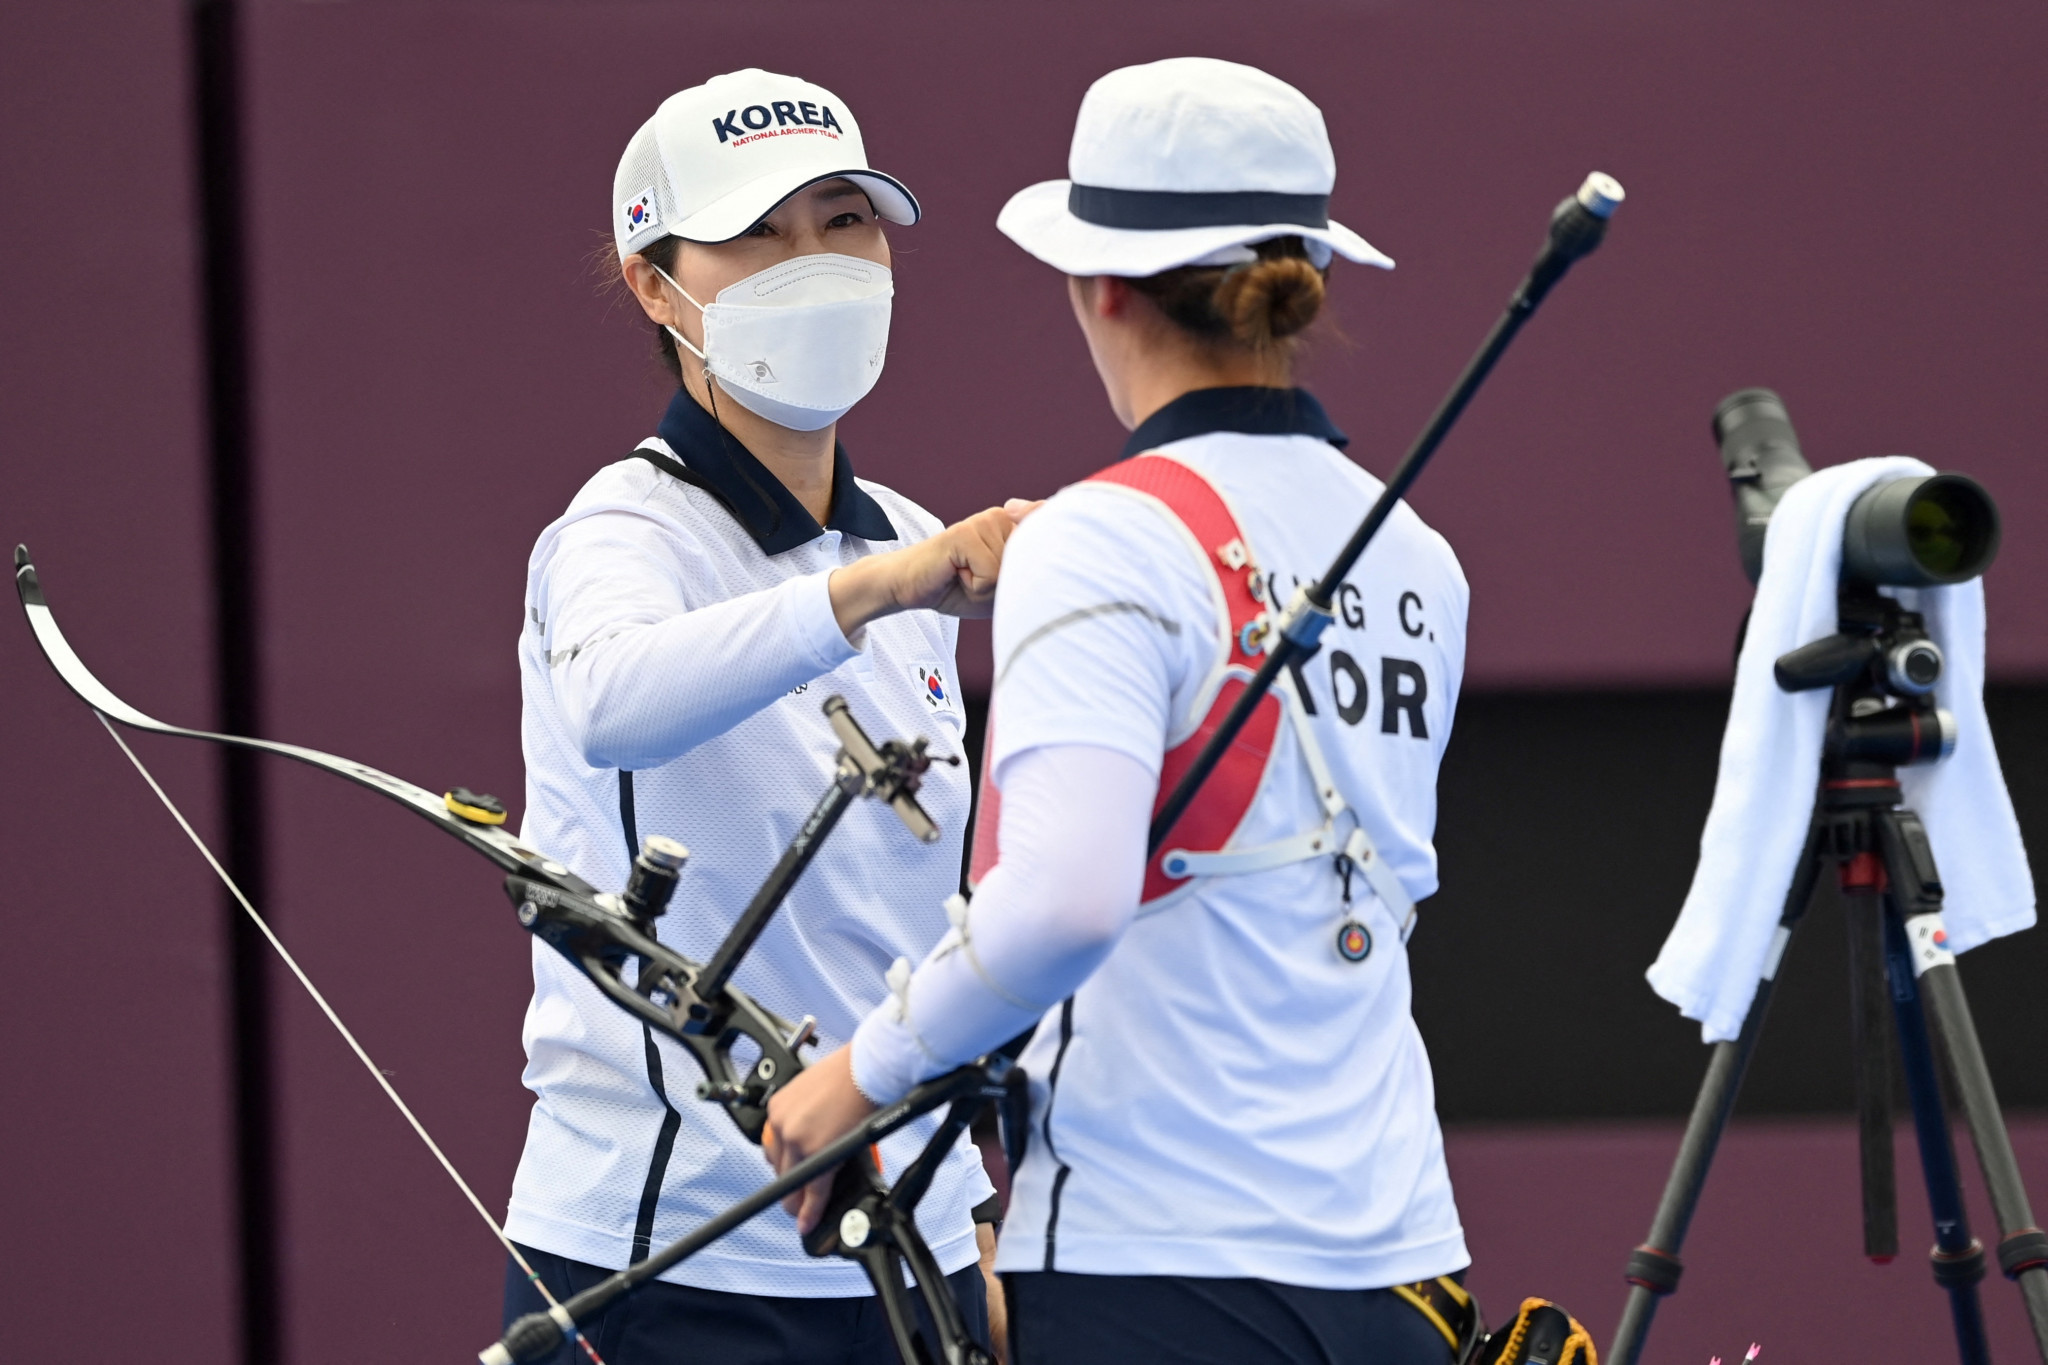 Gwangju beats Madrid to hosting rights for 2025 World Archery Championships